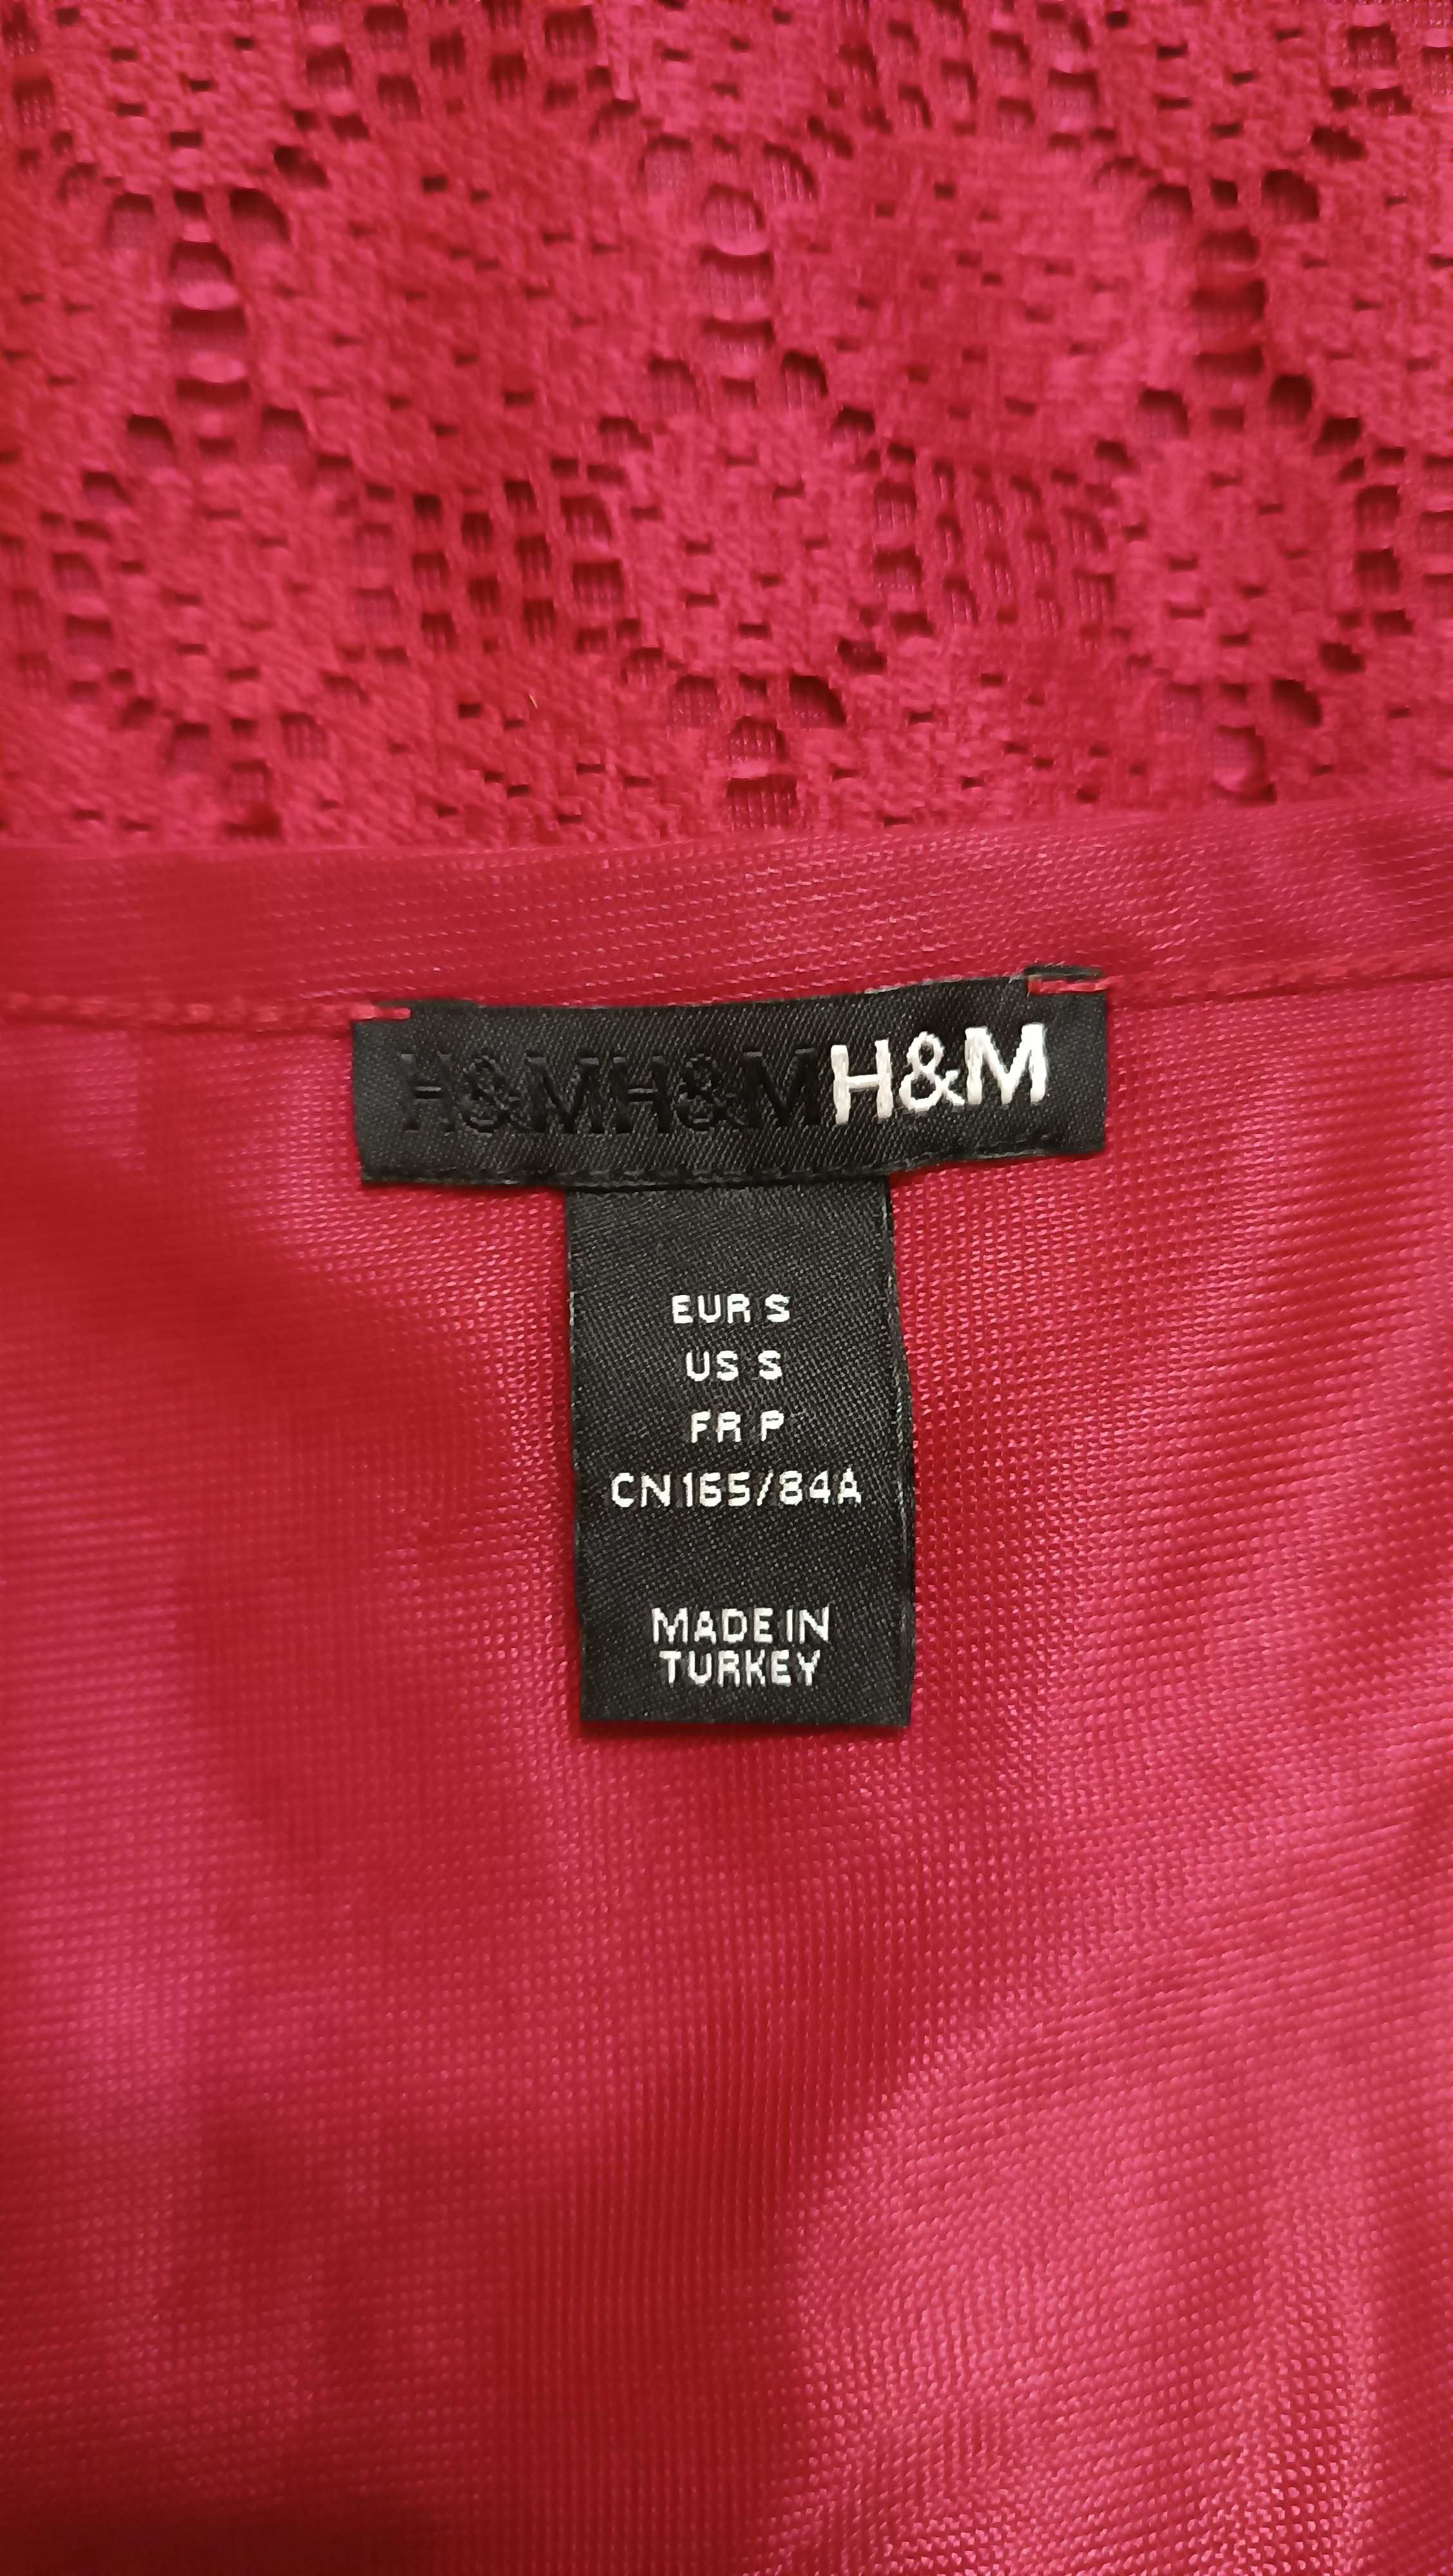 Koronkowa burgundowa bluzka ciążowa 36 H&M